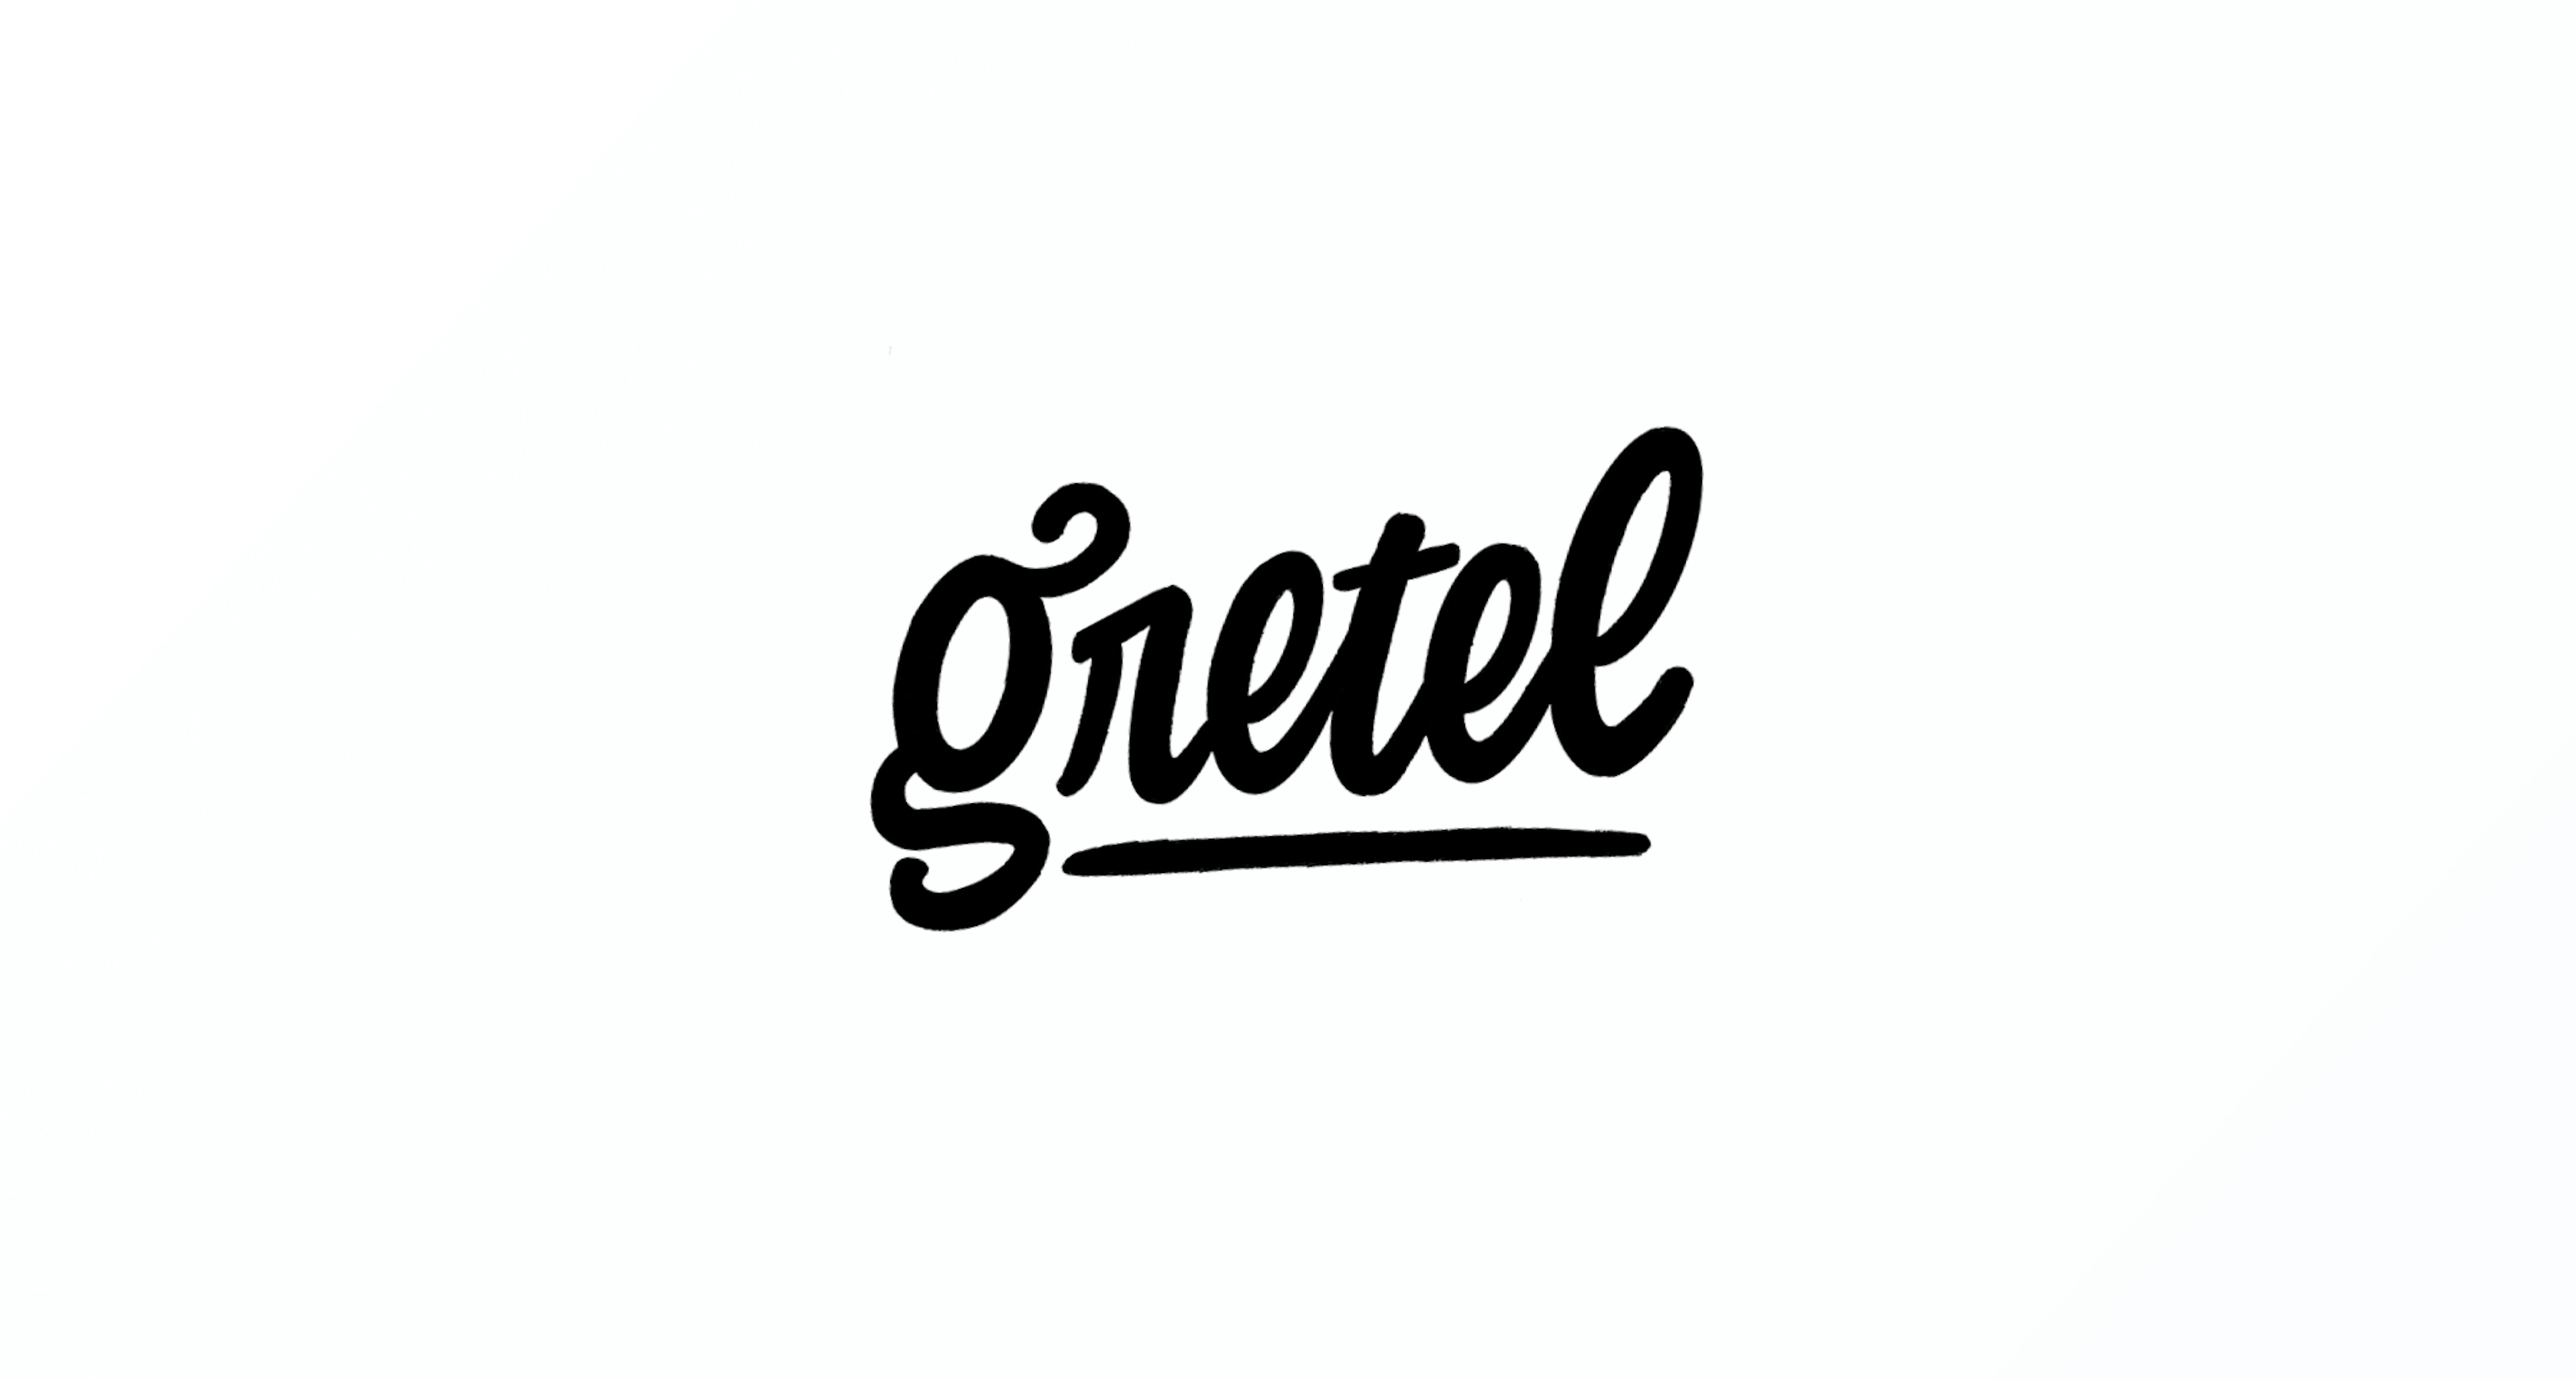 Gretel wordmark logo sketch